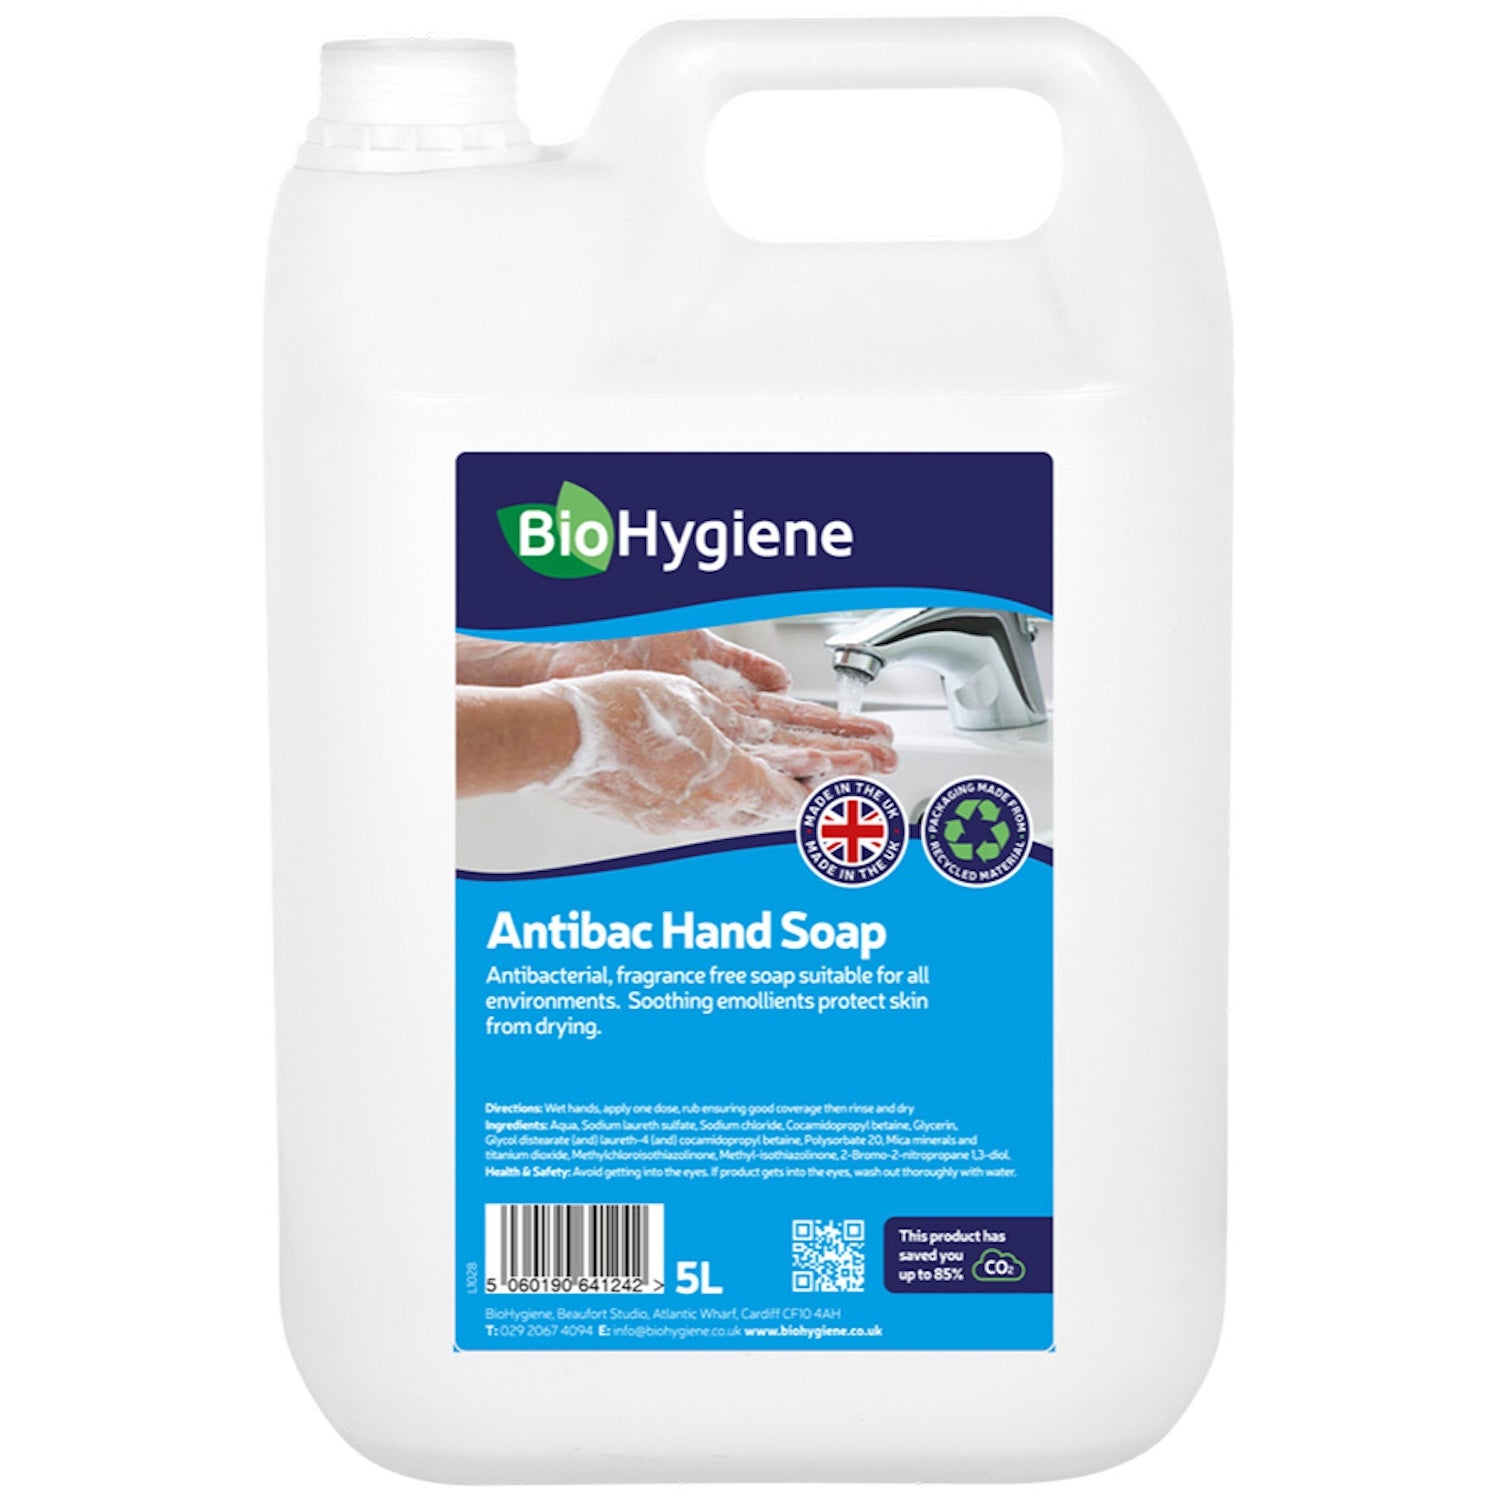 BioHygiene Antibac Hand Soap White Unfragranced | 5L | Single